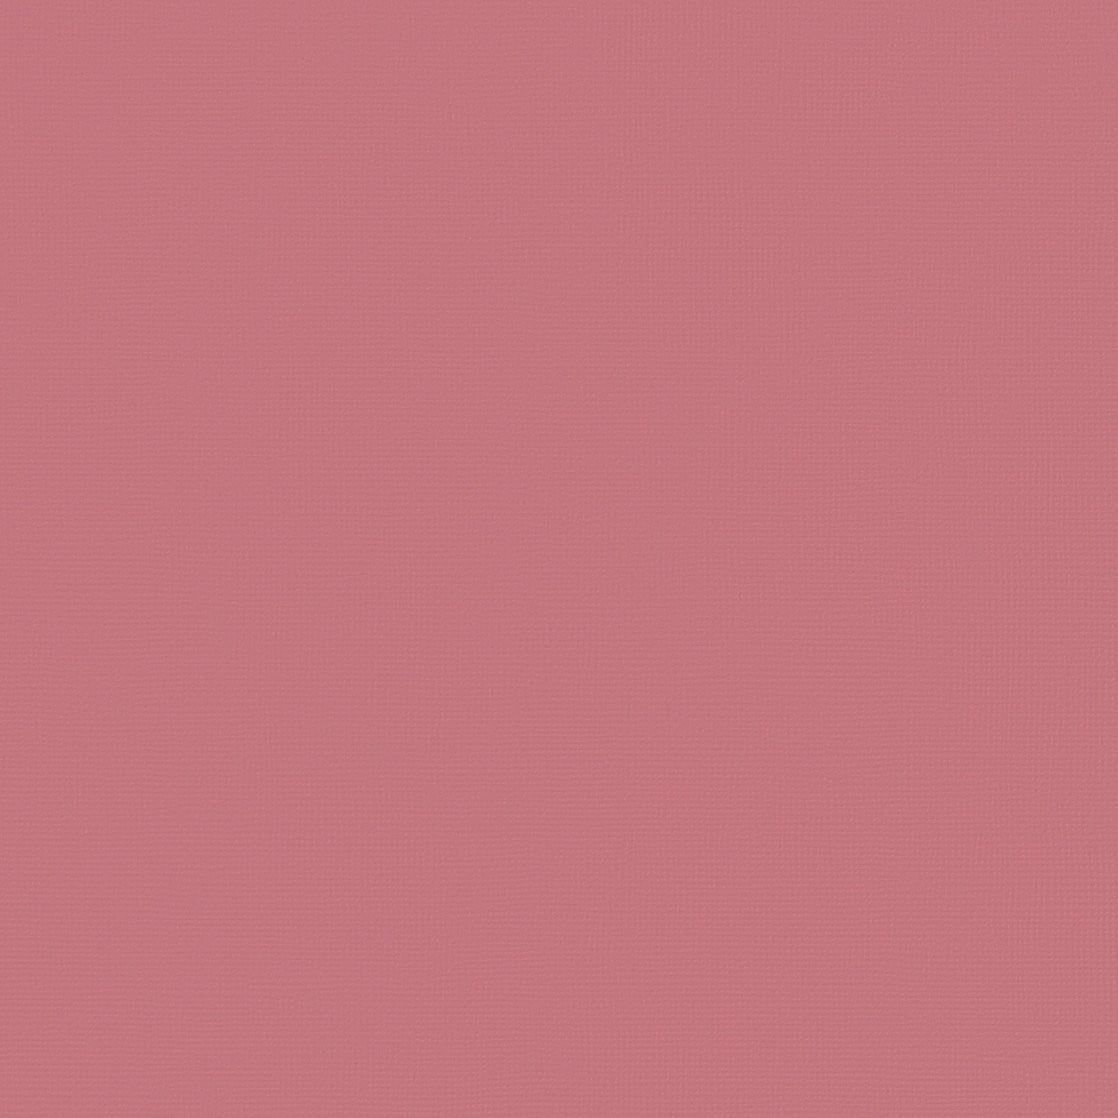 ROSEBUD dusty pink cardstock - 12x12 inch - 80 lb - textured scrapbook paper - American Crafts